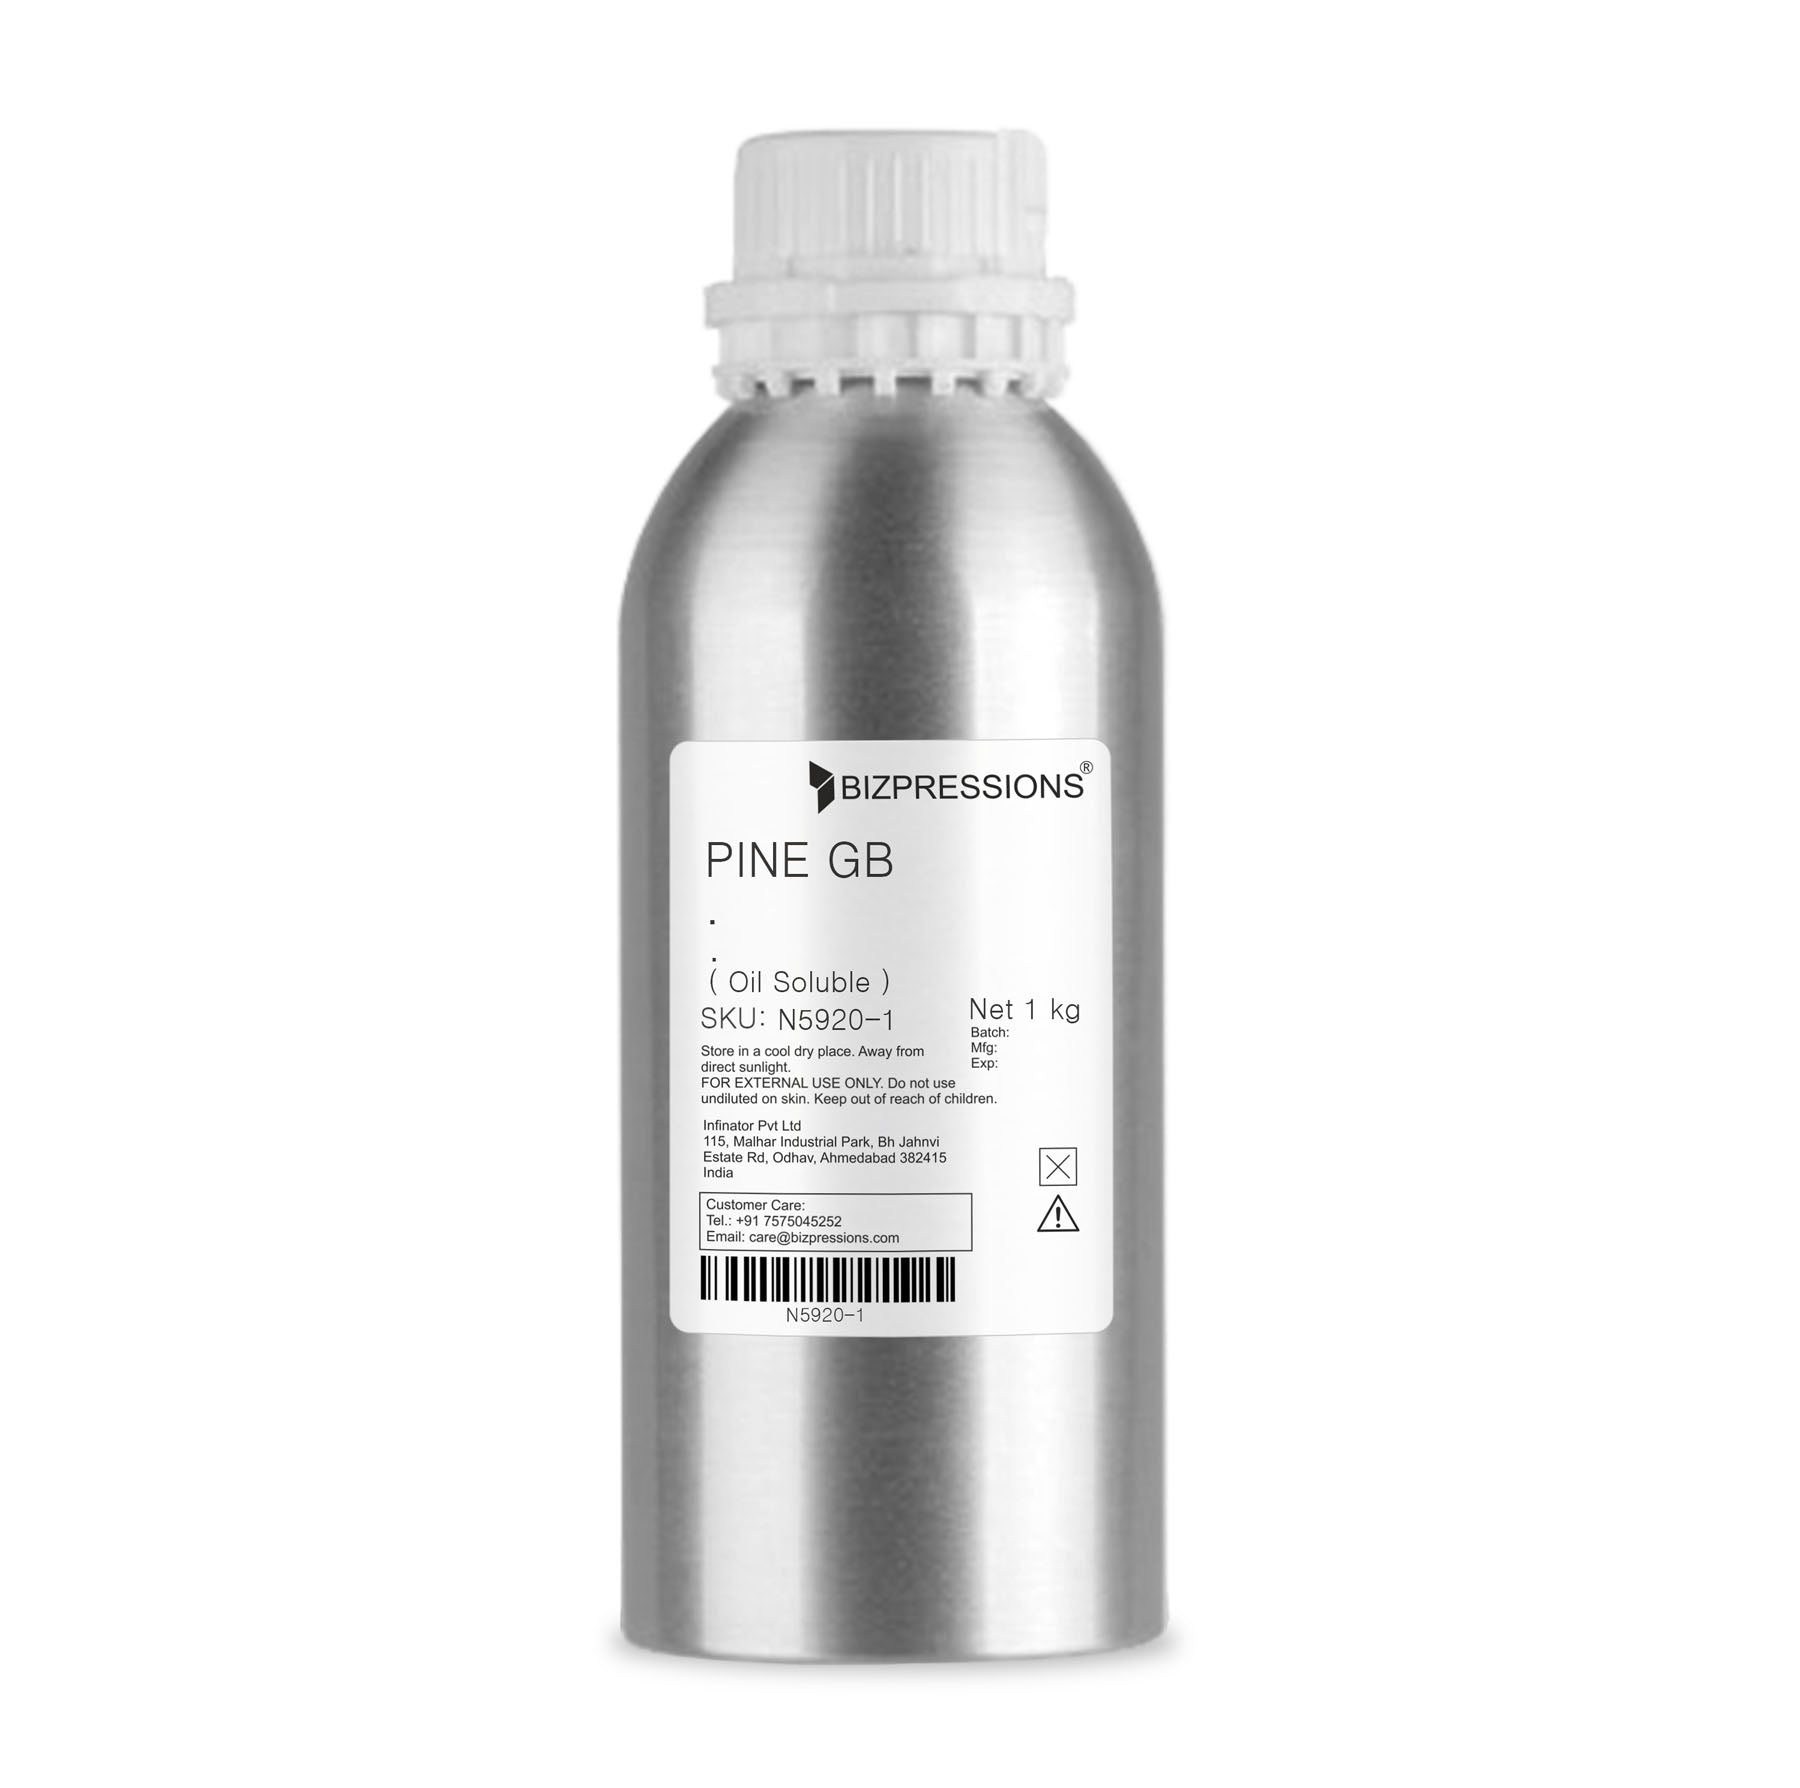 PINE GB - Fragrance ( Oil Soluble ) - 1 kg